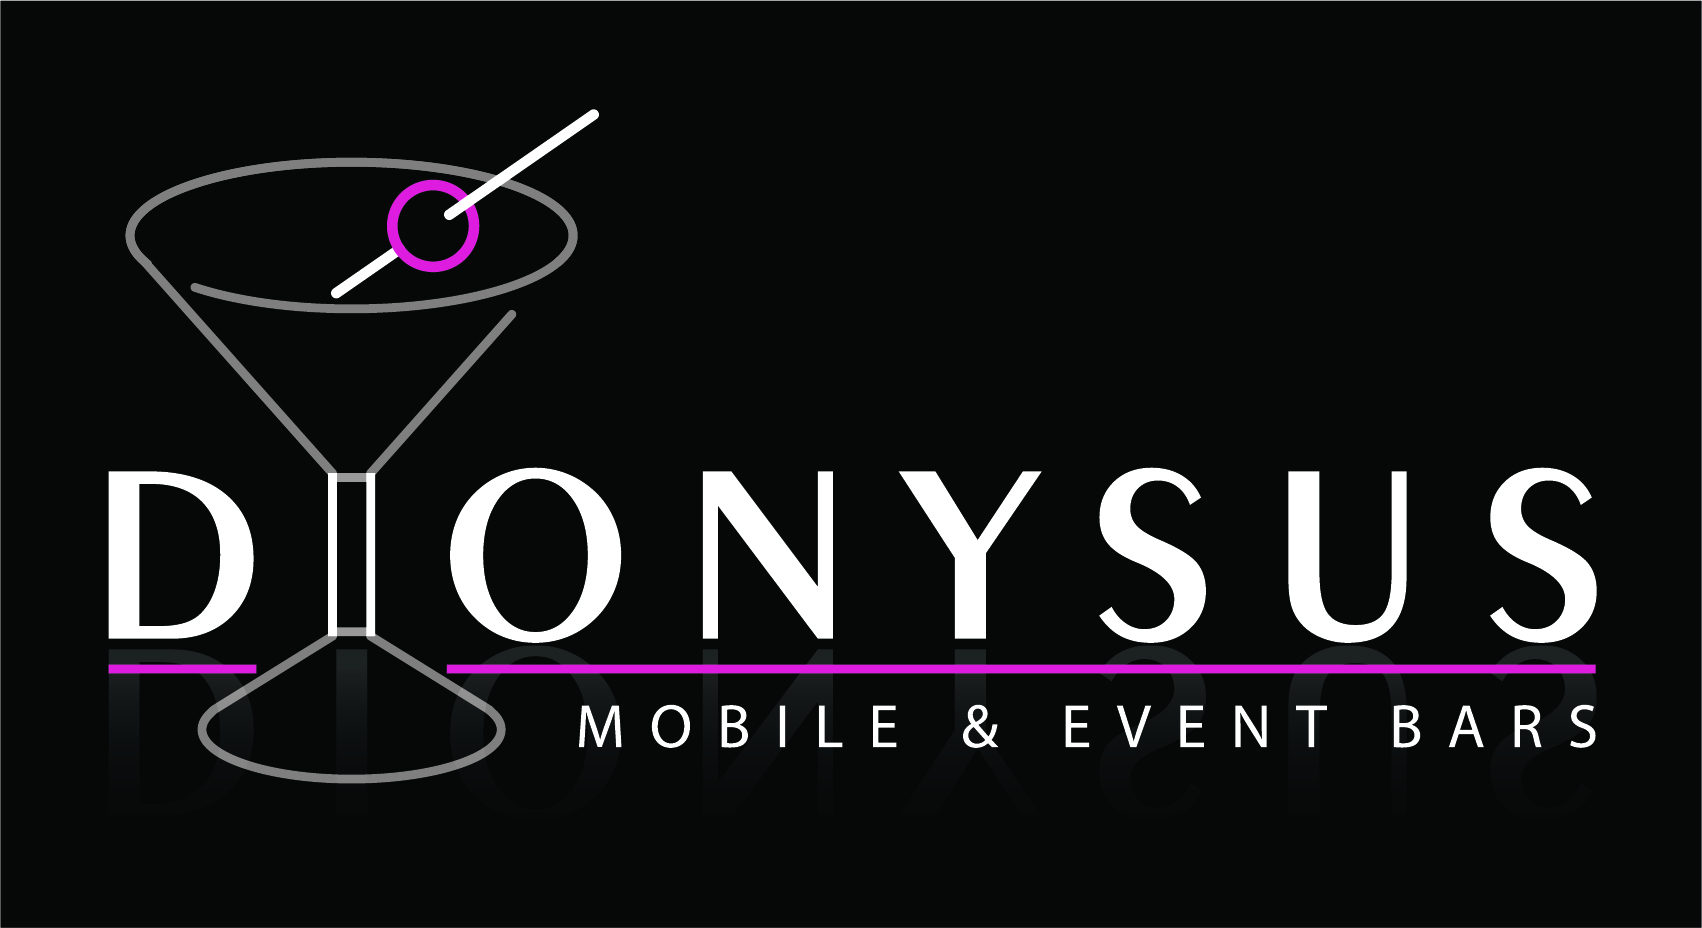 Dionysus Mobile & Event Bars